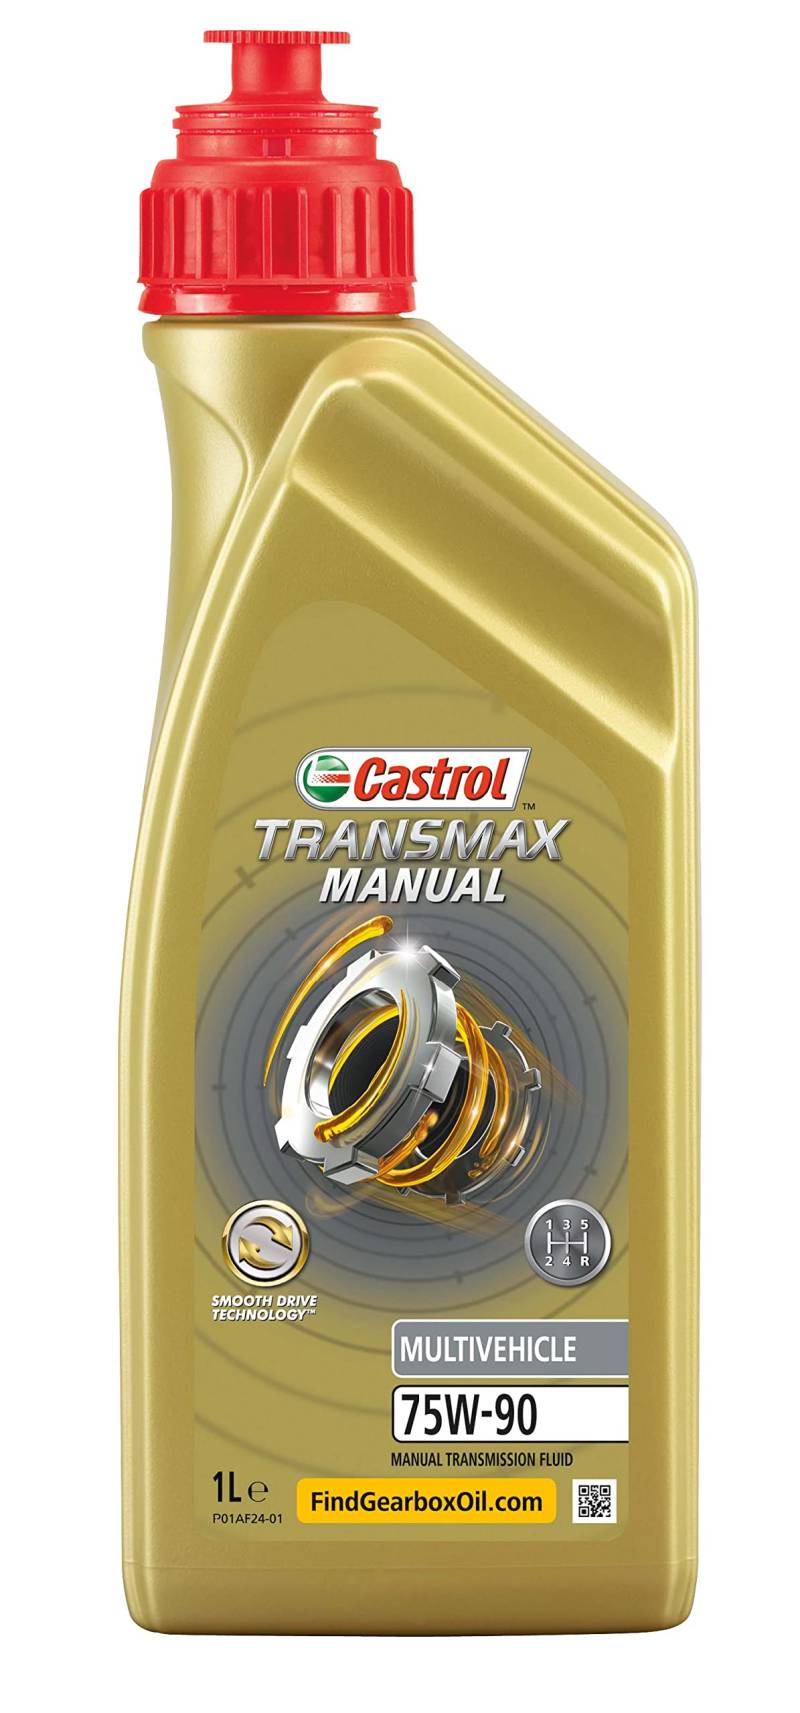 Castrol TRANSMAX Manual Multivehicle 75W-90, 1 Liter von Castrol